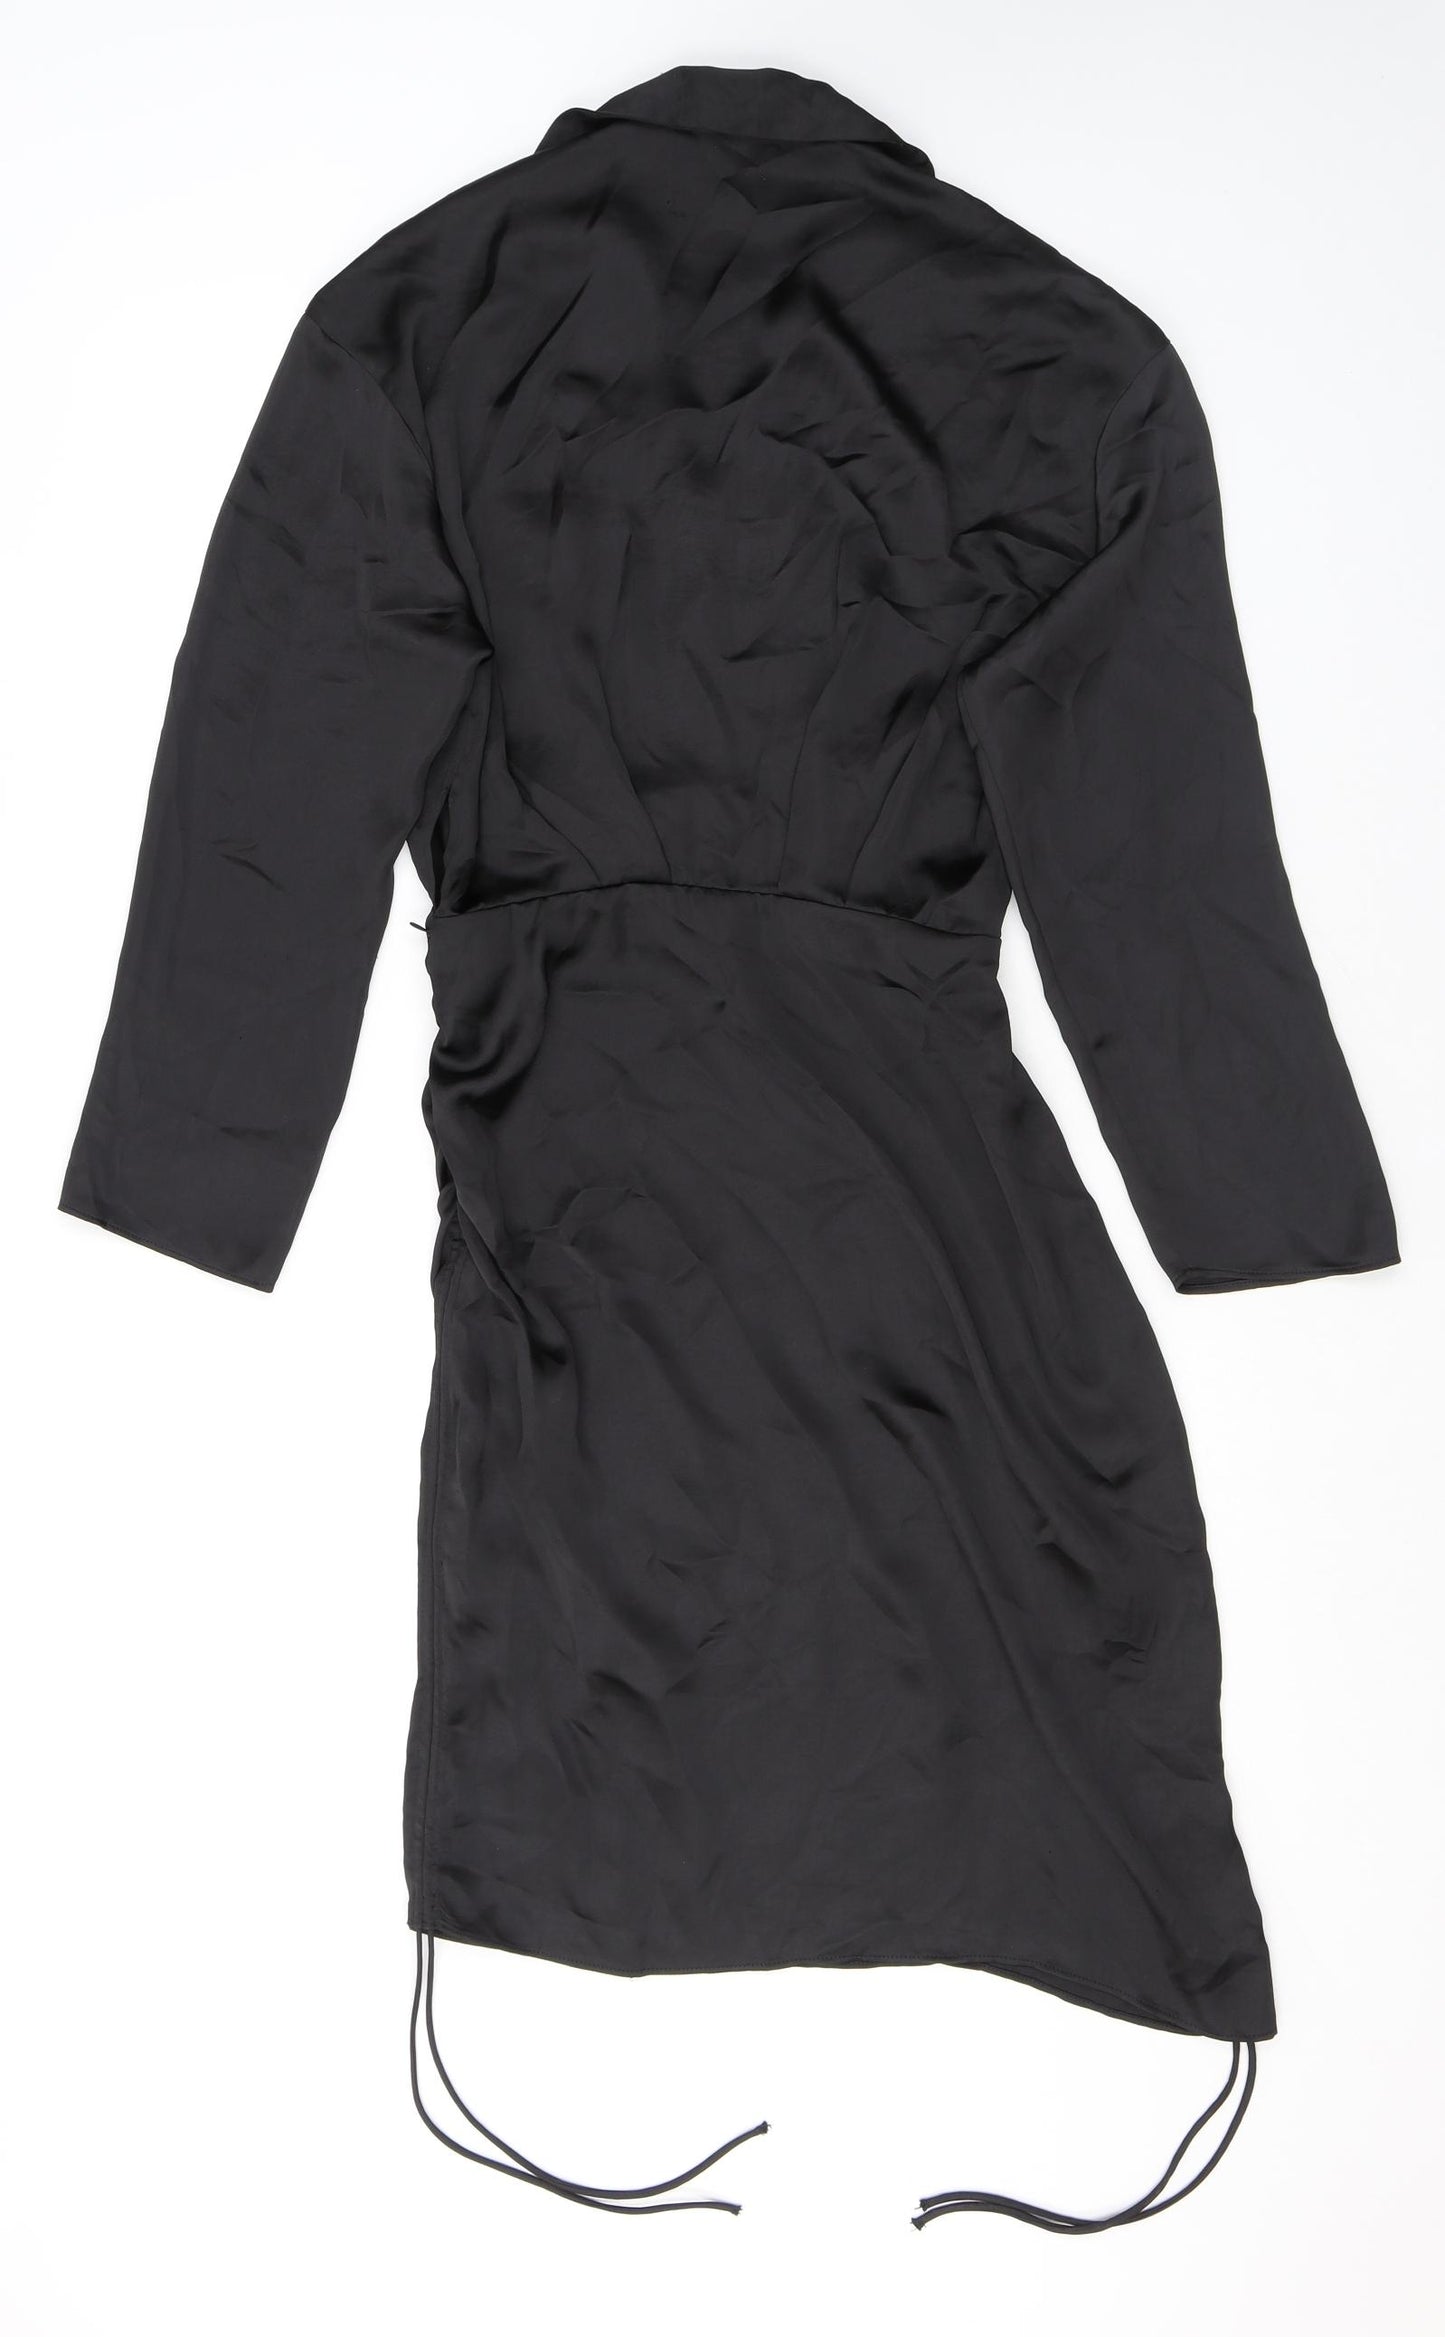 Zara Womens Black Polyester Shirt Dress Size S Collared Pullover - Drawstring Detail